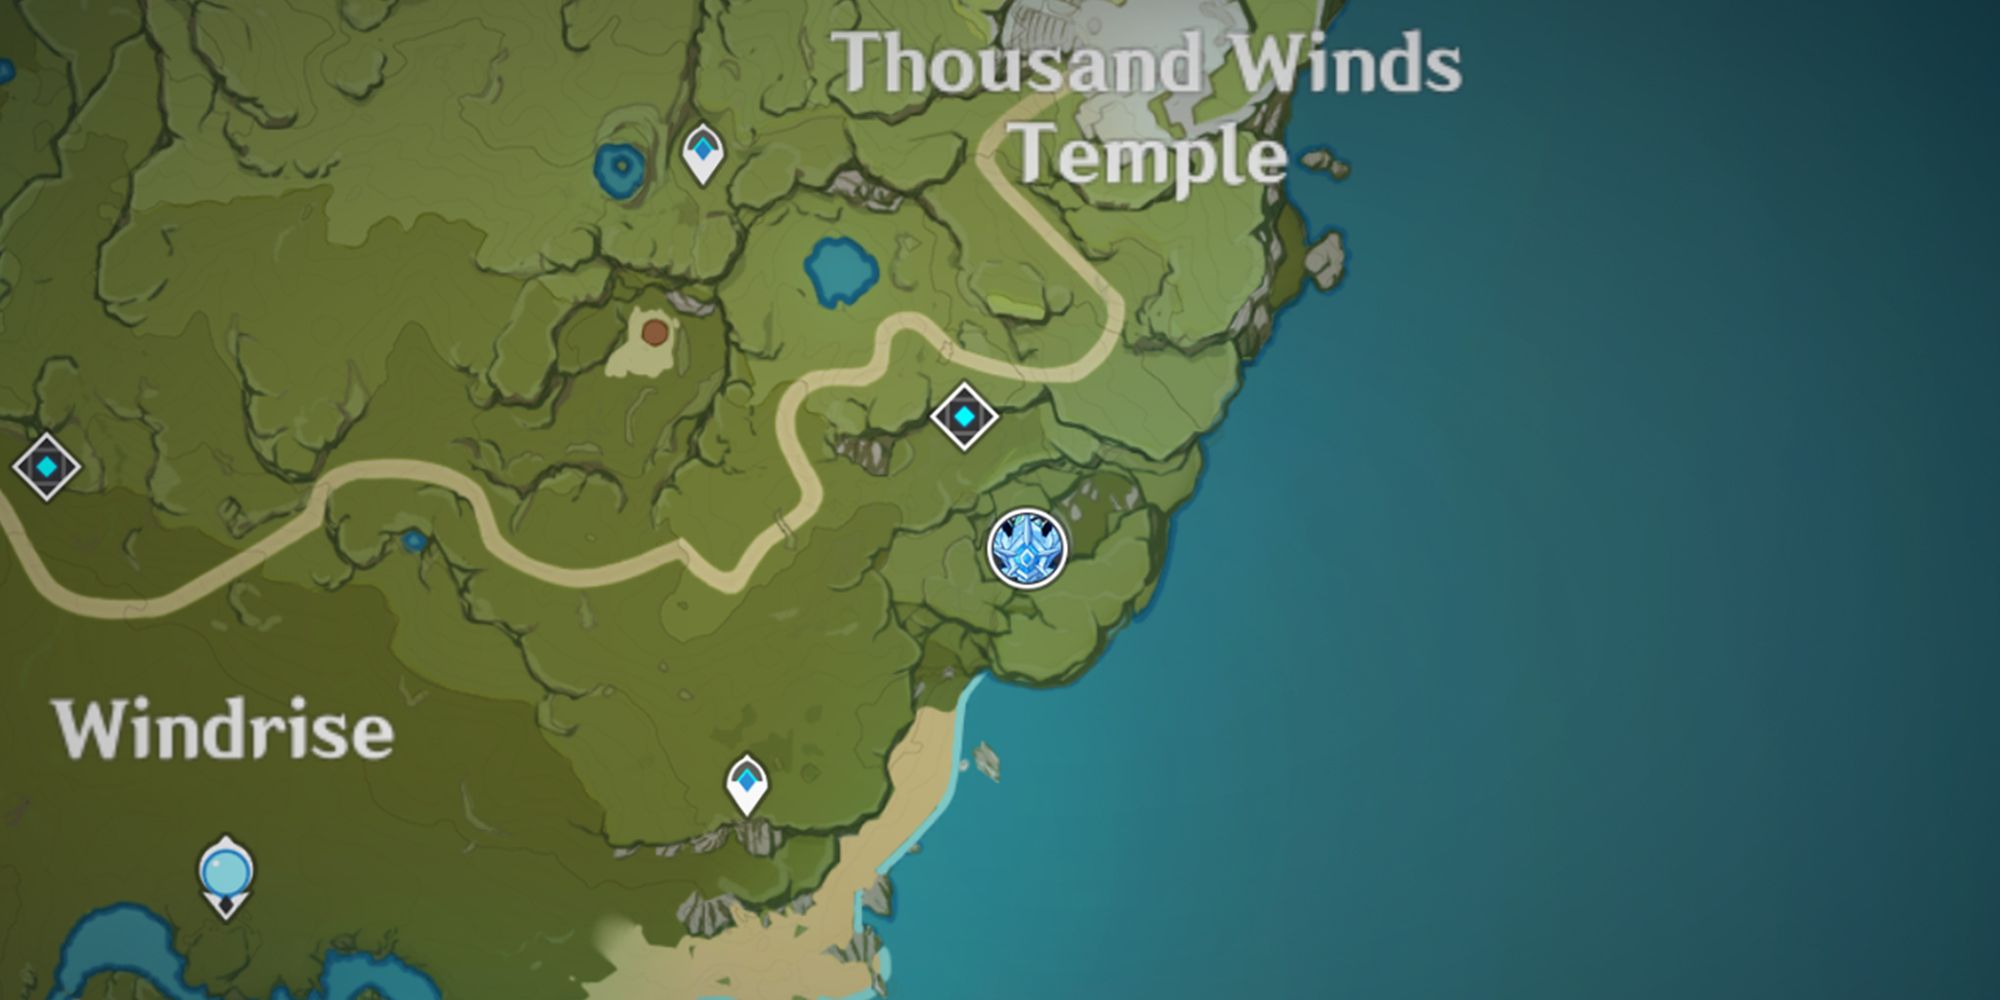 Cryo Regisvine Location near Thousand Winds Temple